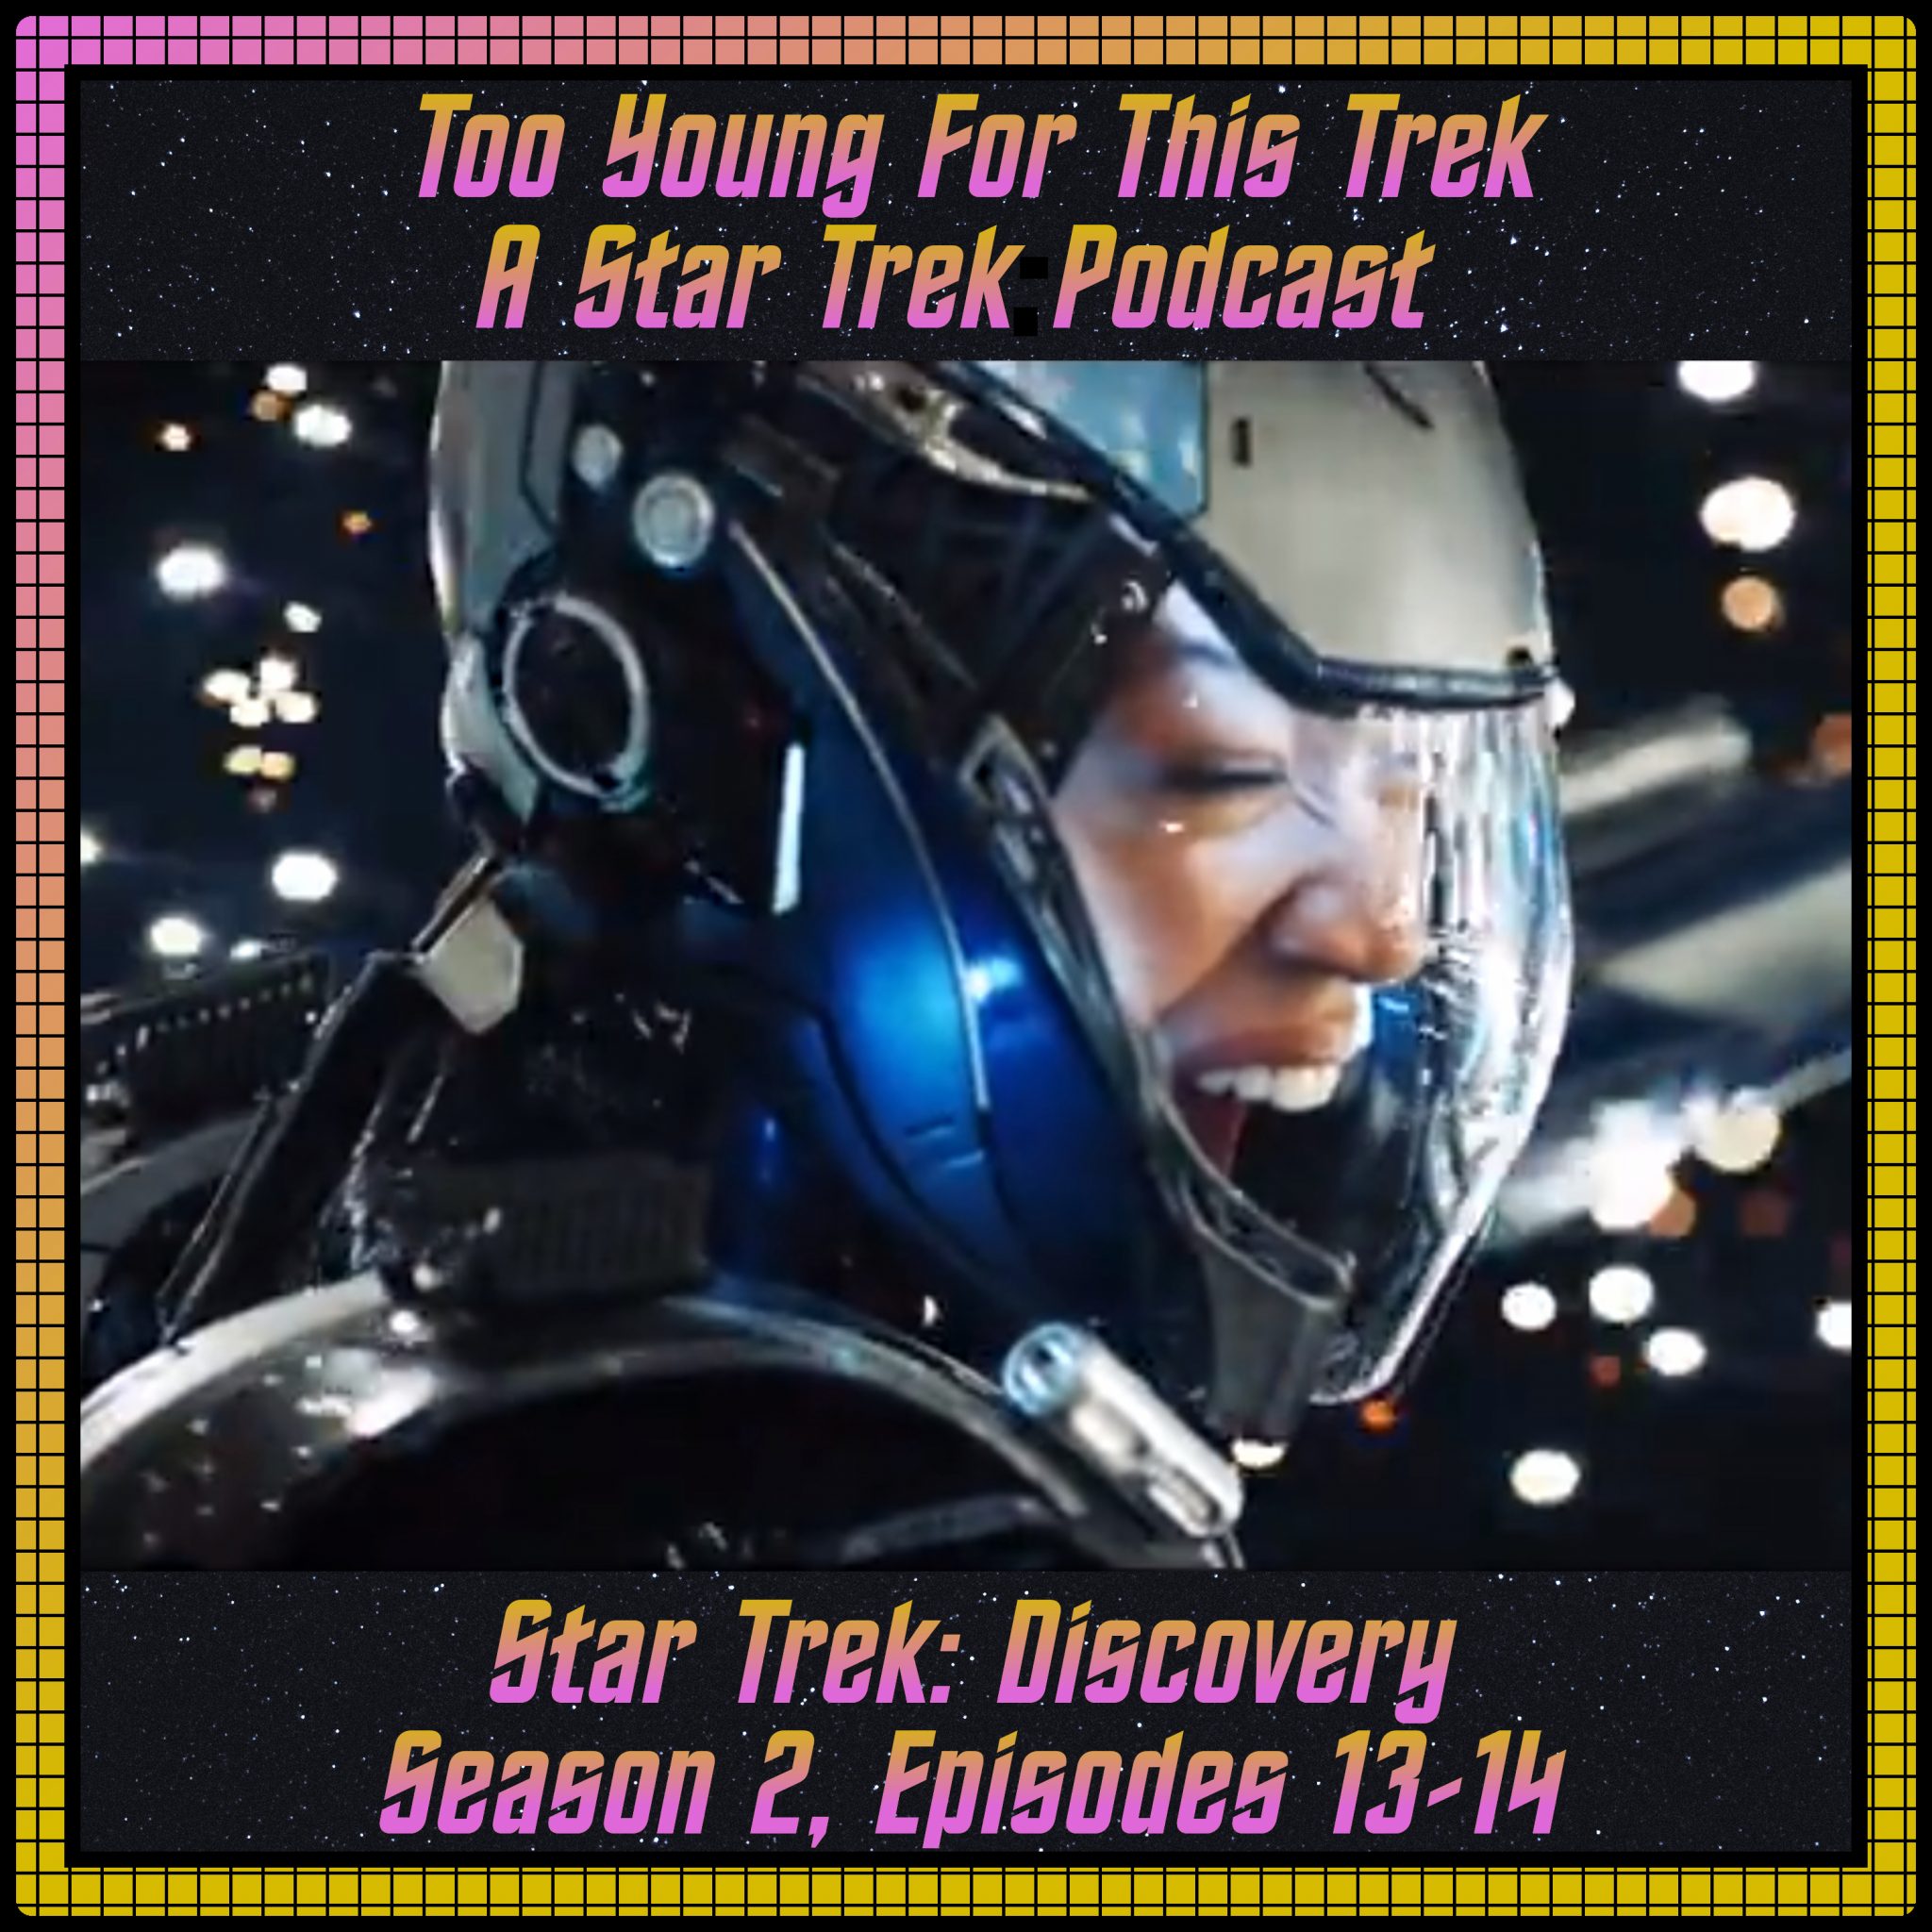 Star Trek: Discovery S2 E13-14